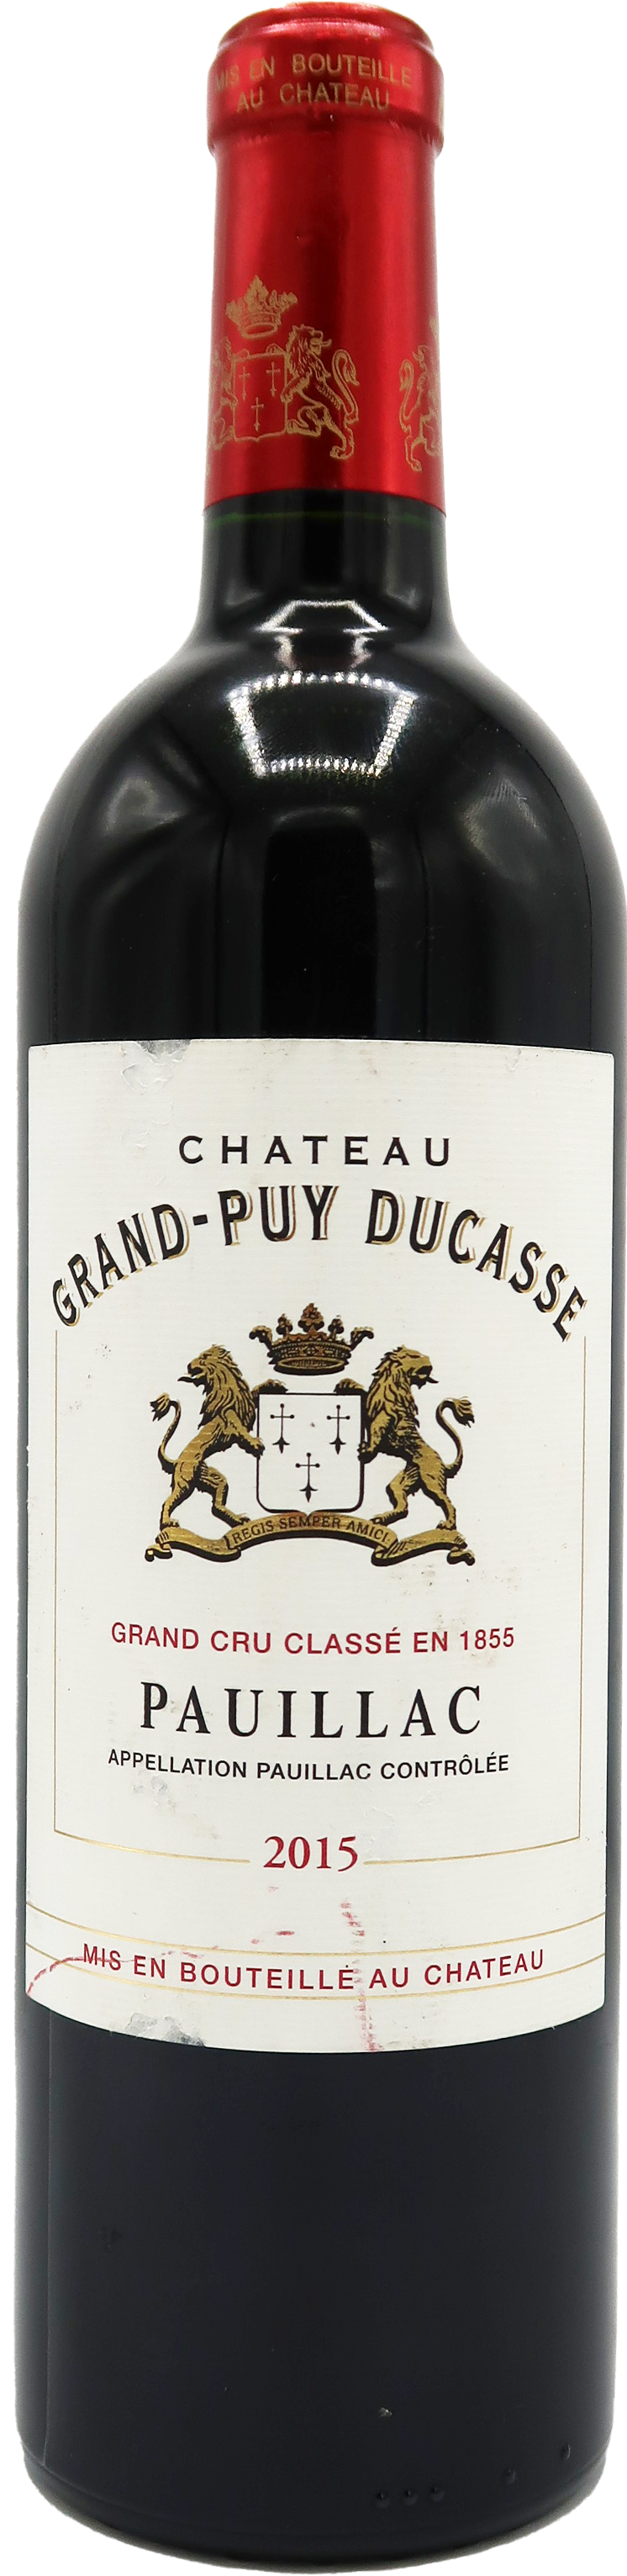 Château Grand-Puy Ducasse 2015 - Pauillac